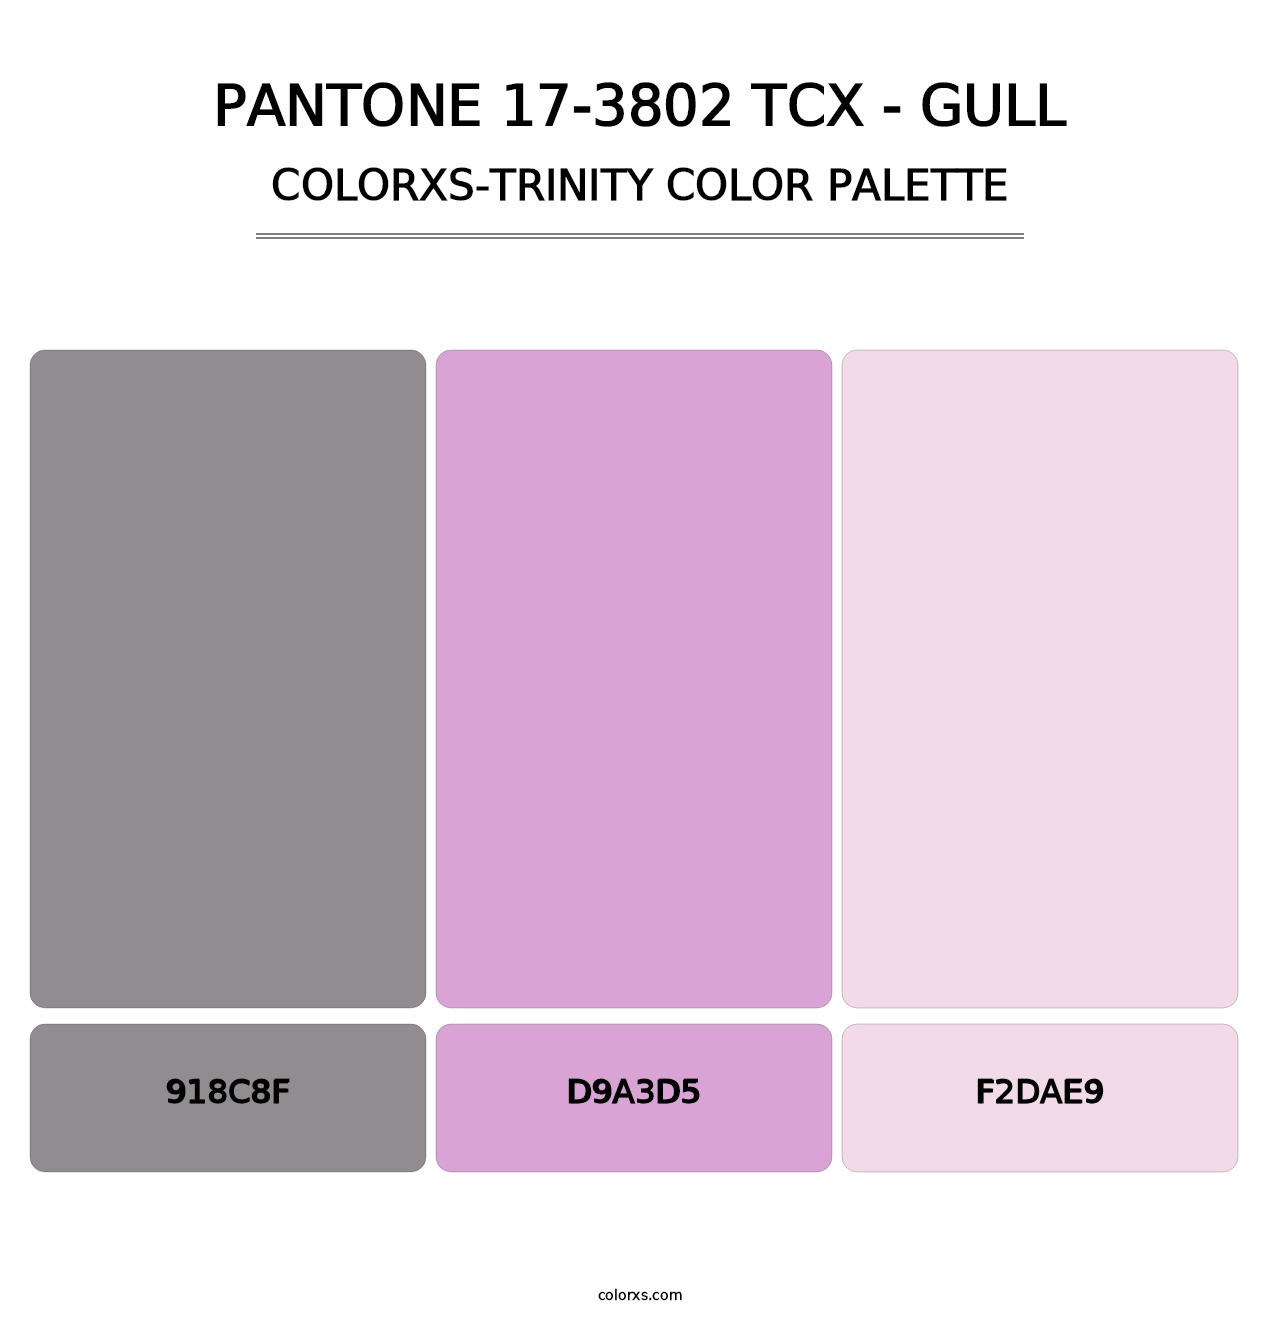 PANTONE 17-3802 TCX - Gull - Colorxs Trinity Palette